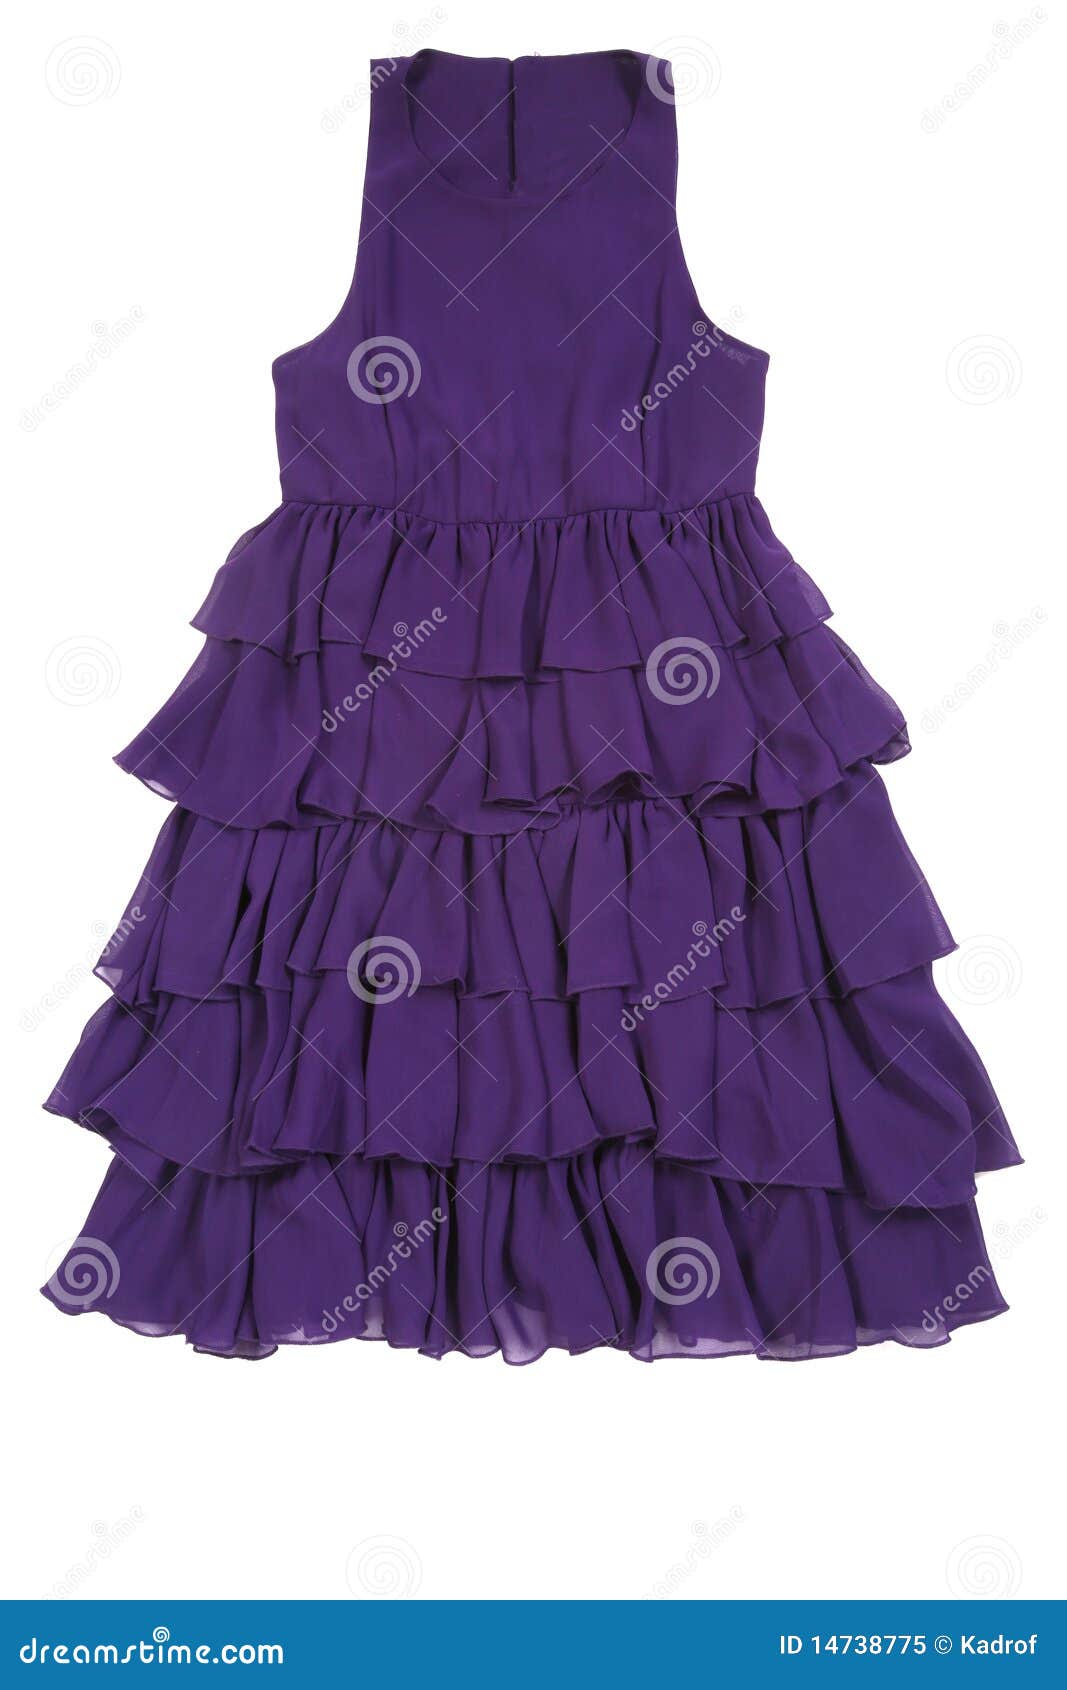 Royalty Free Stock Photo: Purple women dress